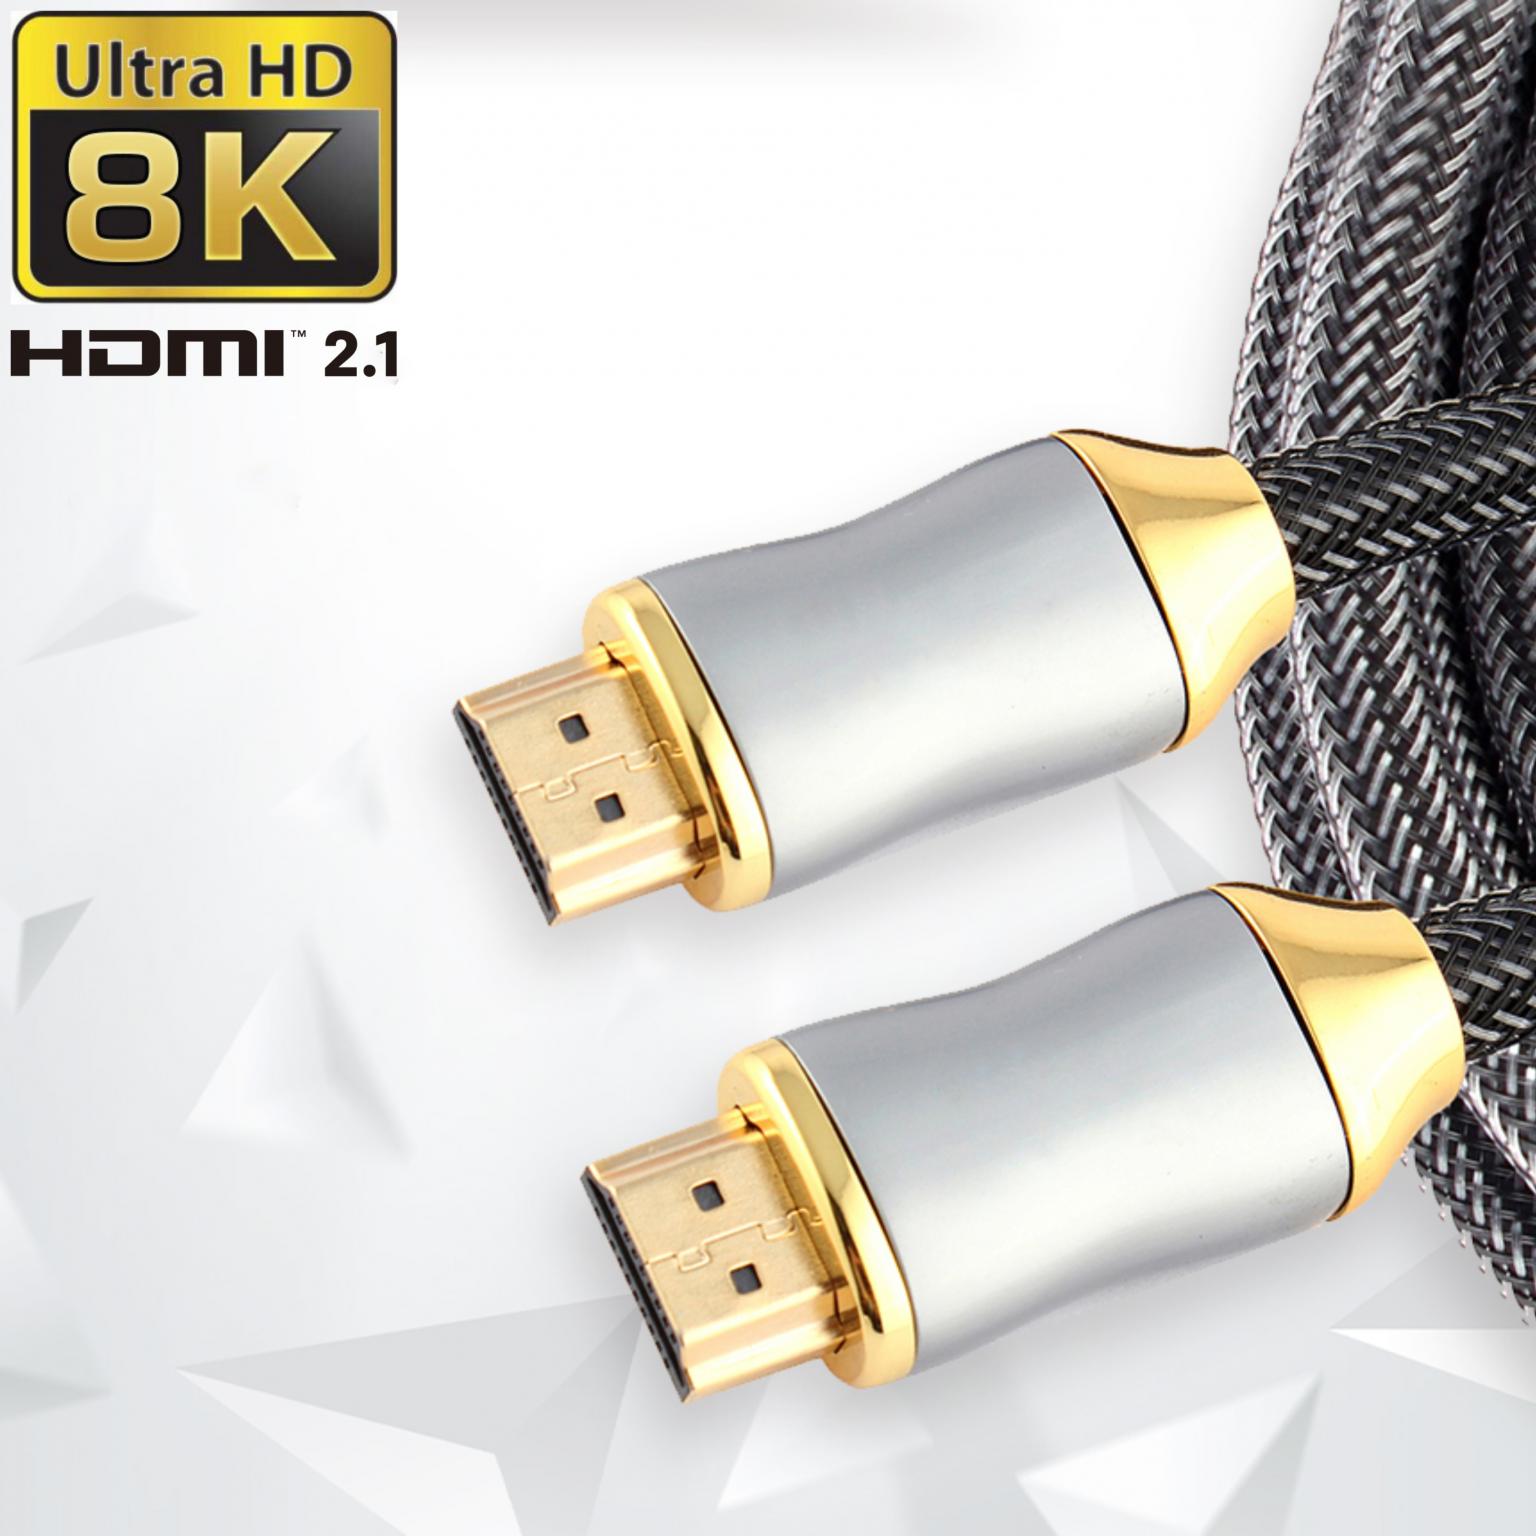 - Versie: 2.1 - Ultra Speed, Verguld: Ja, Aansluiting HDMI A male, Aansluiting 2: HDMI A male, Lengte: 0.5 meter.